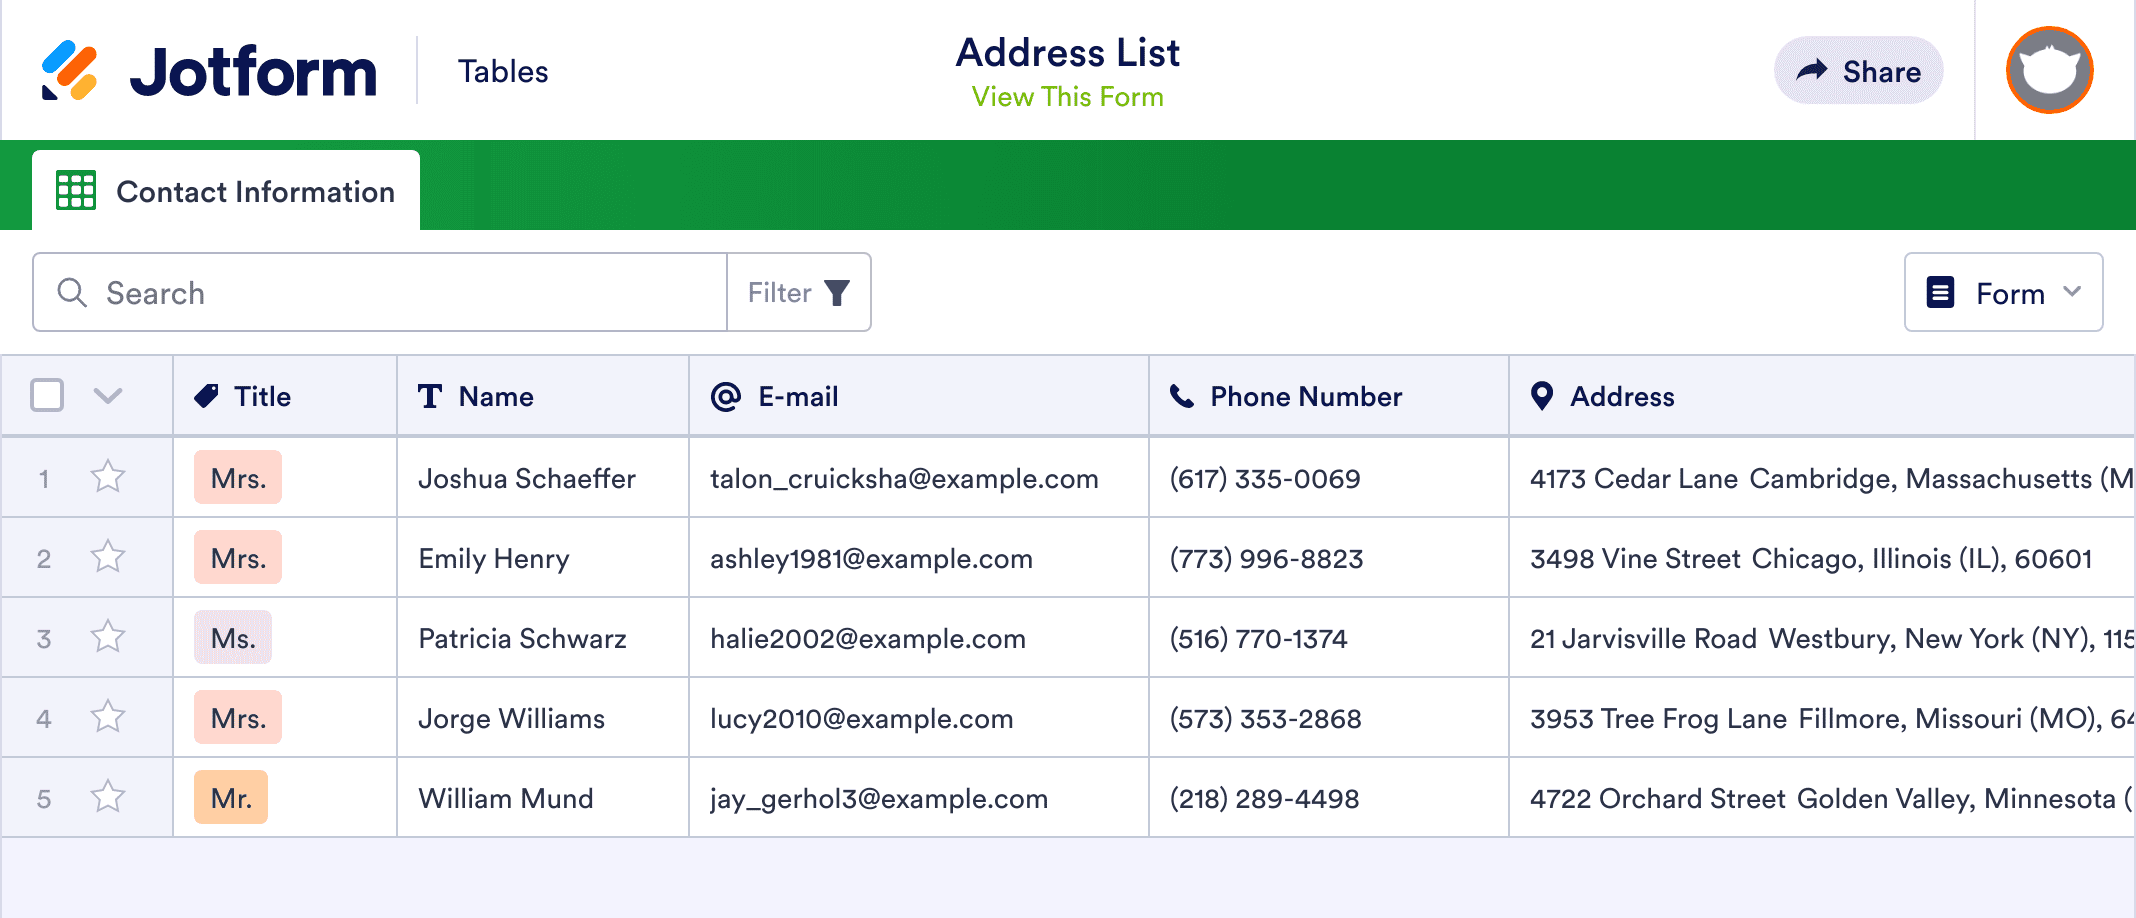 Address List